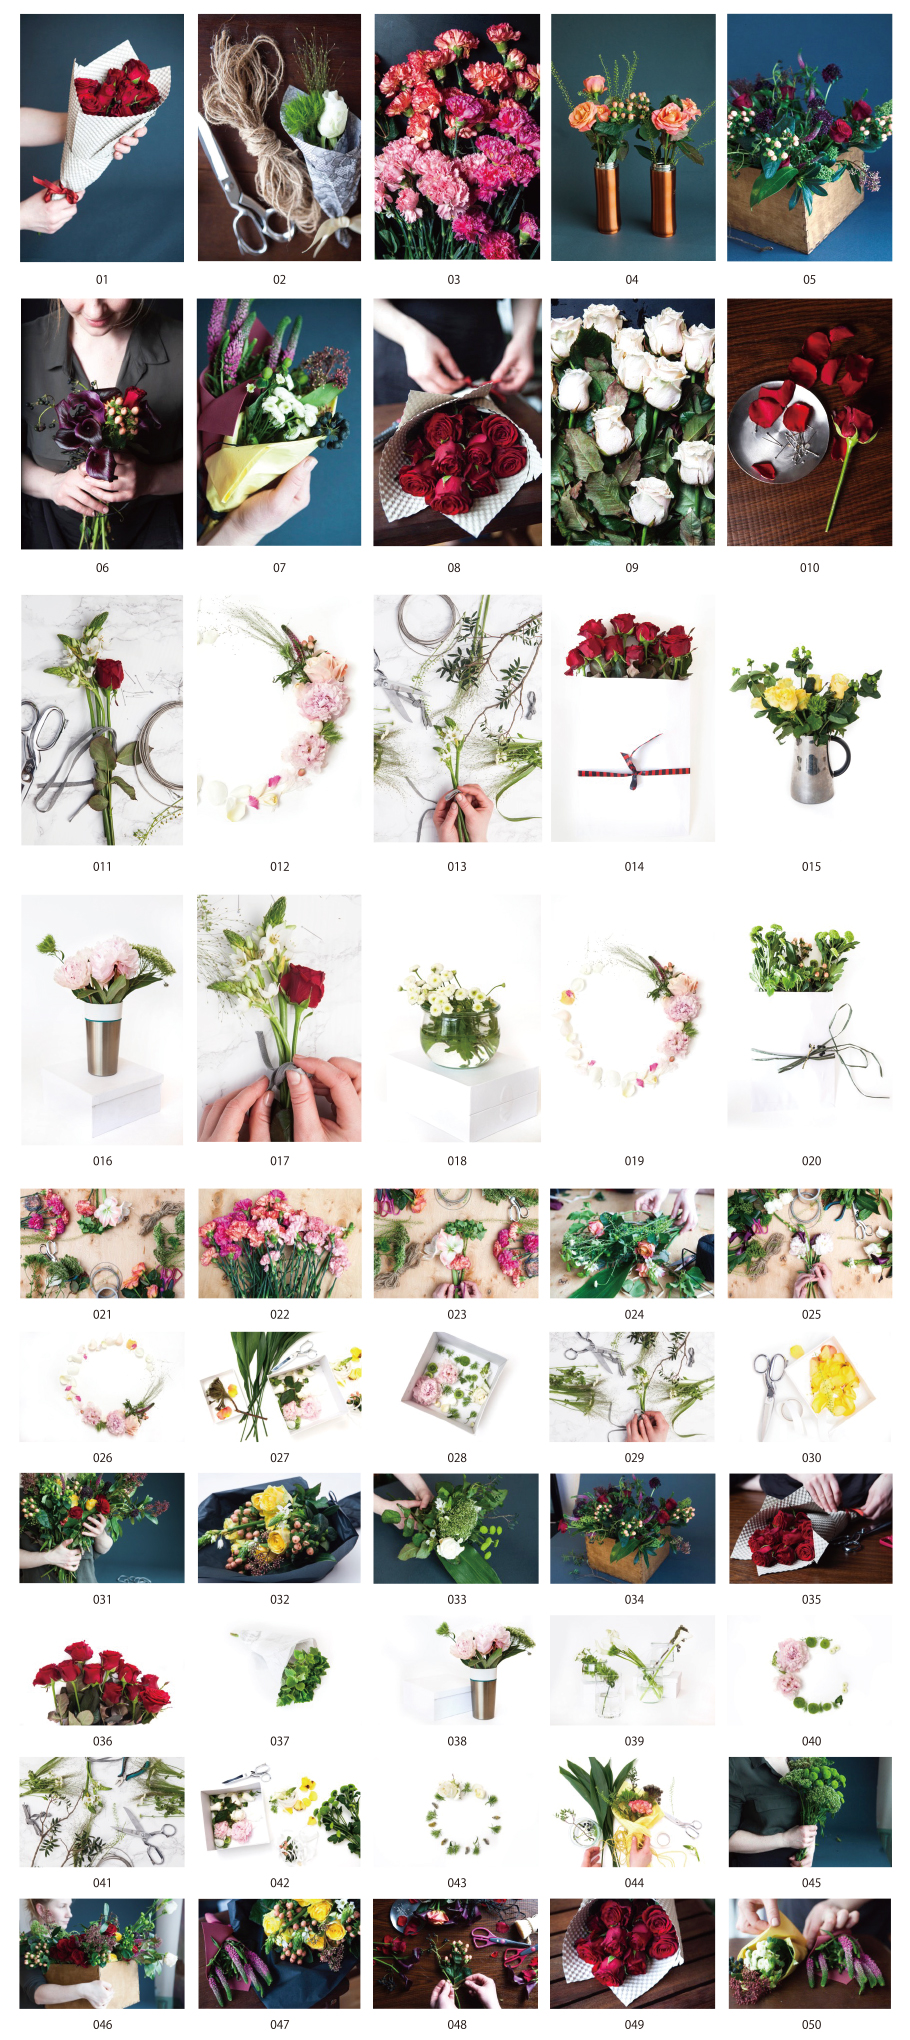 Flower arrangement photos vol.2